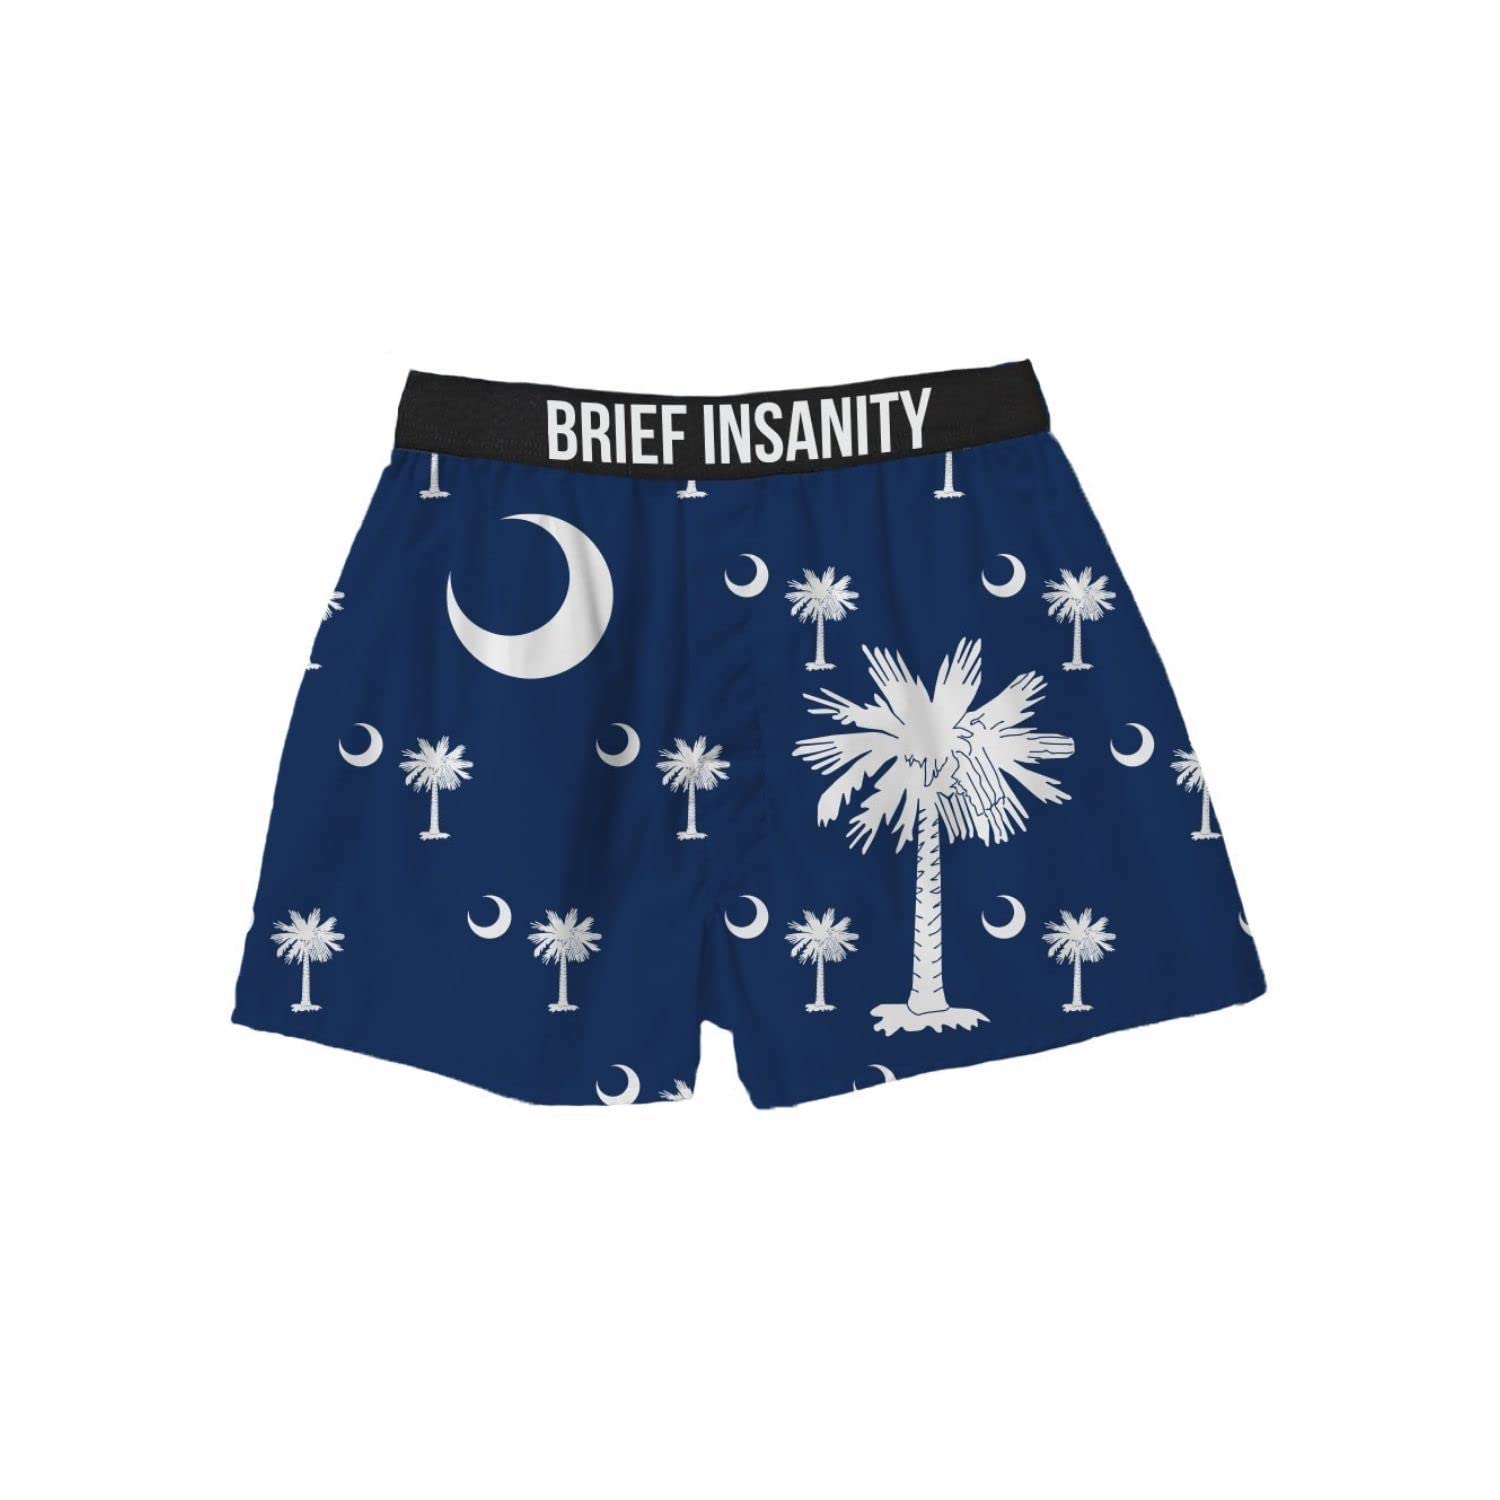 BRIEF INSANITY Palmetto Moon Boxer Shorts